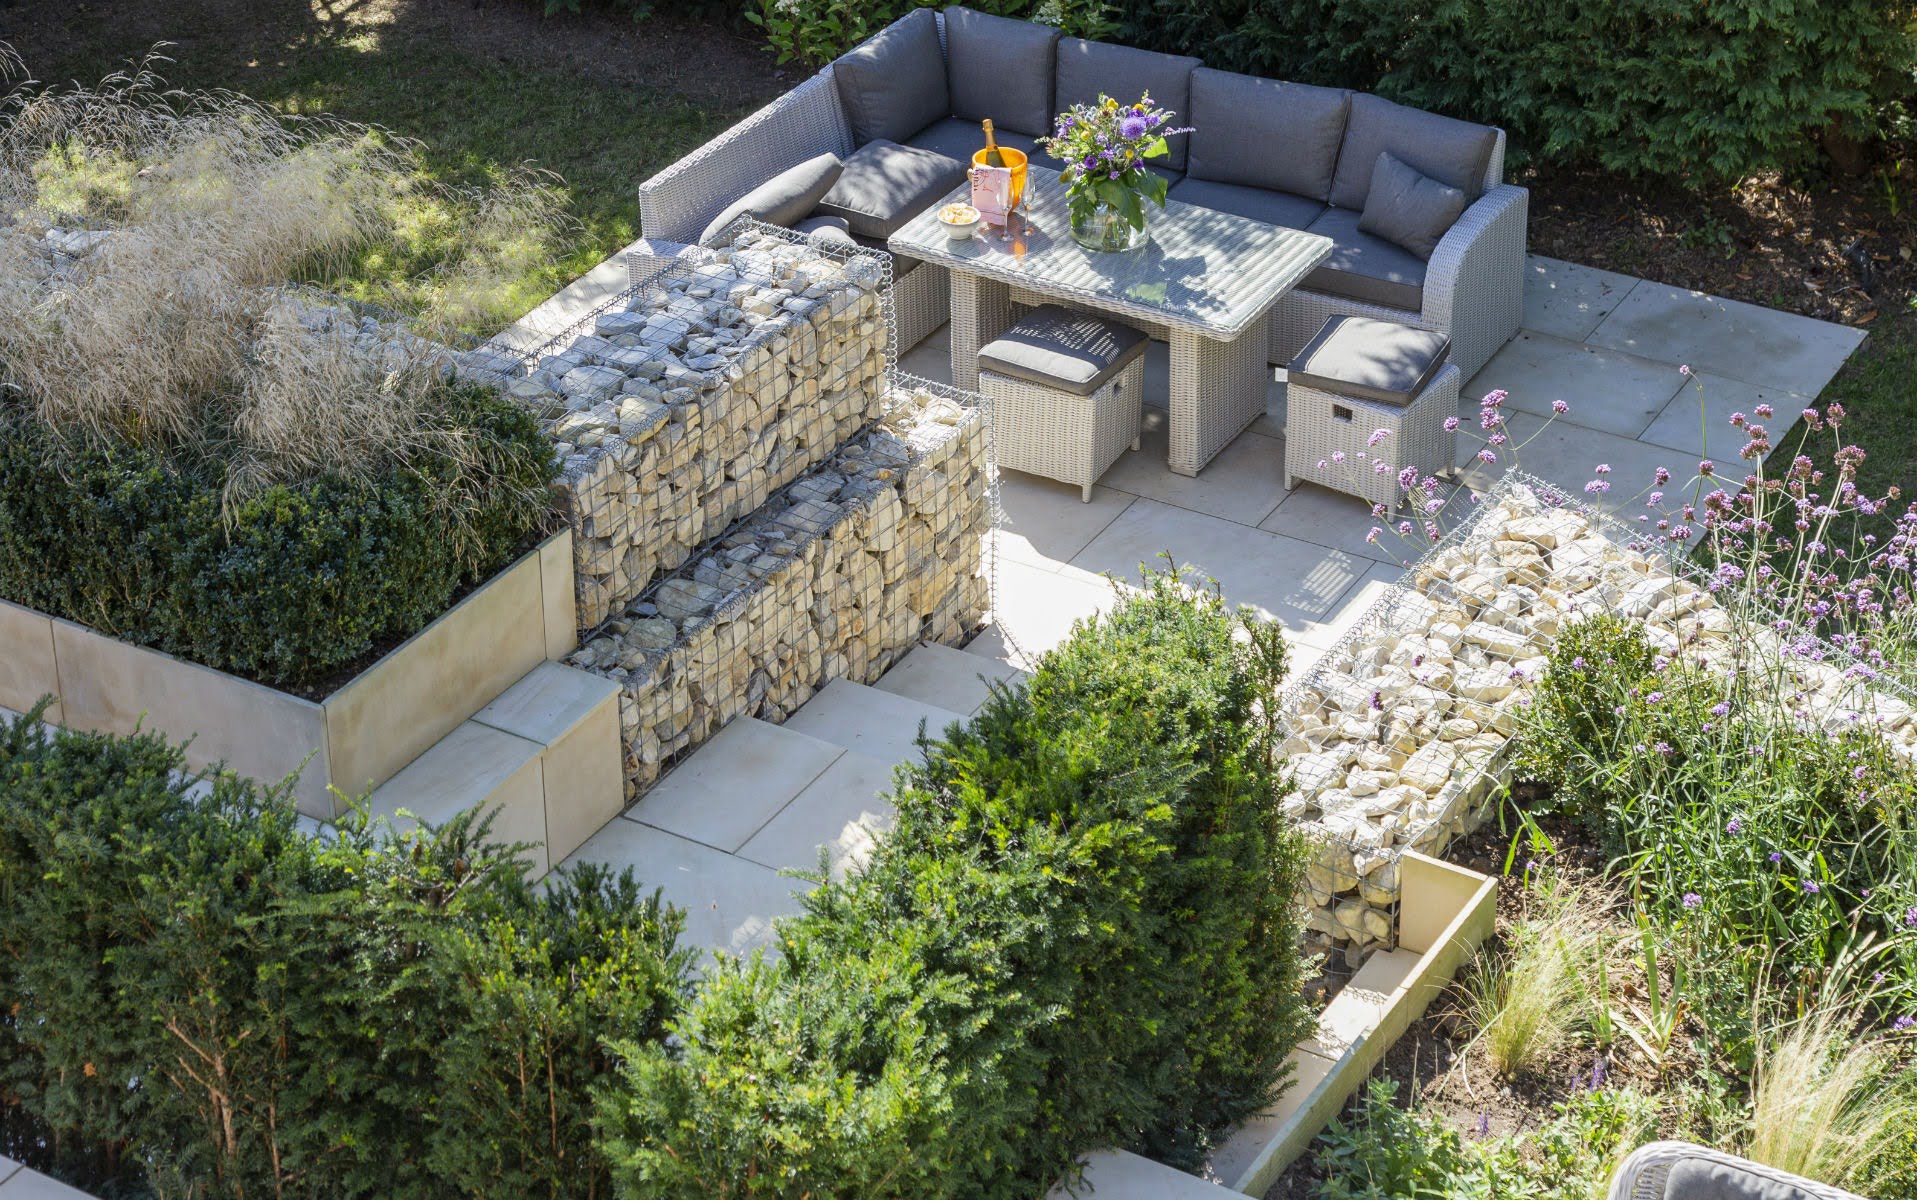 Portfolio Multi-level Landscape Garden Design and Build Lower patio Gabion walls steps